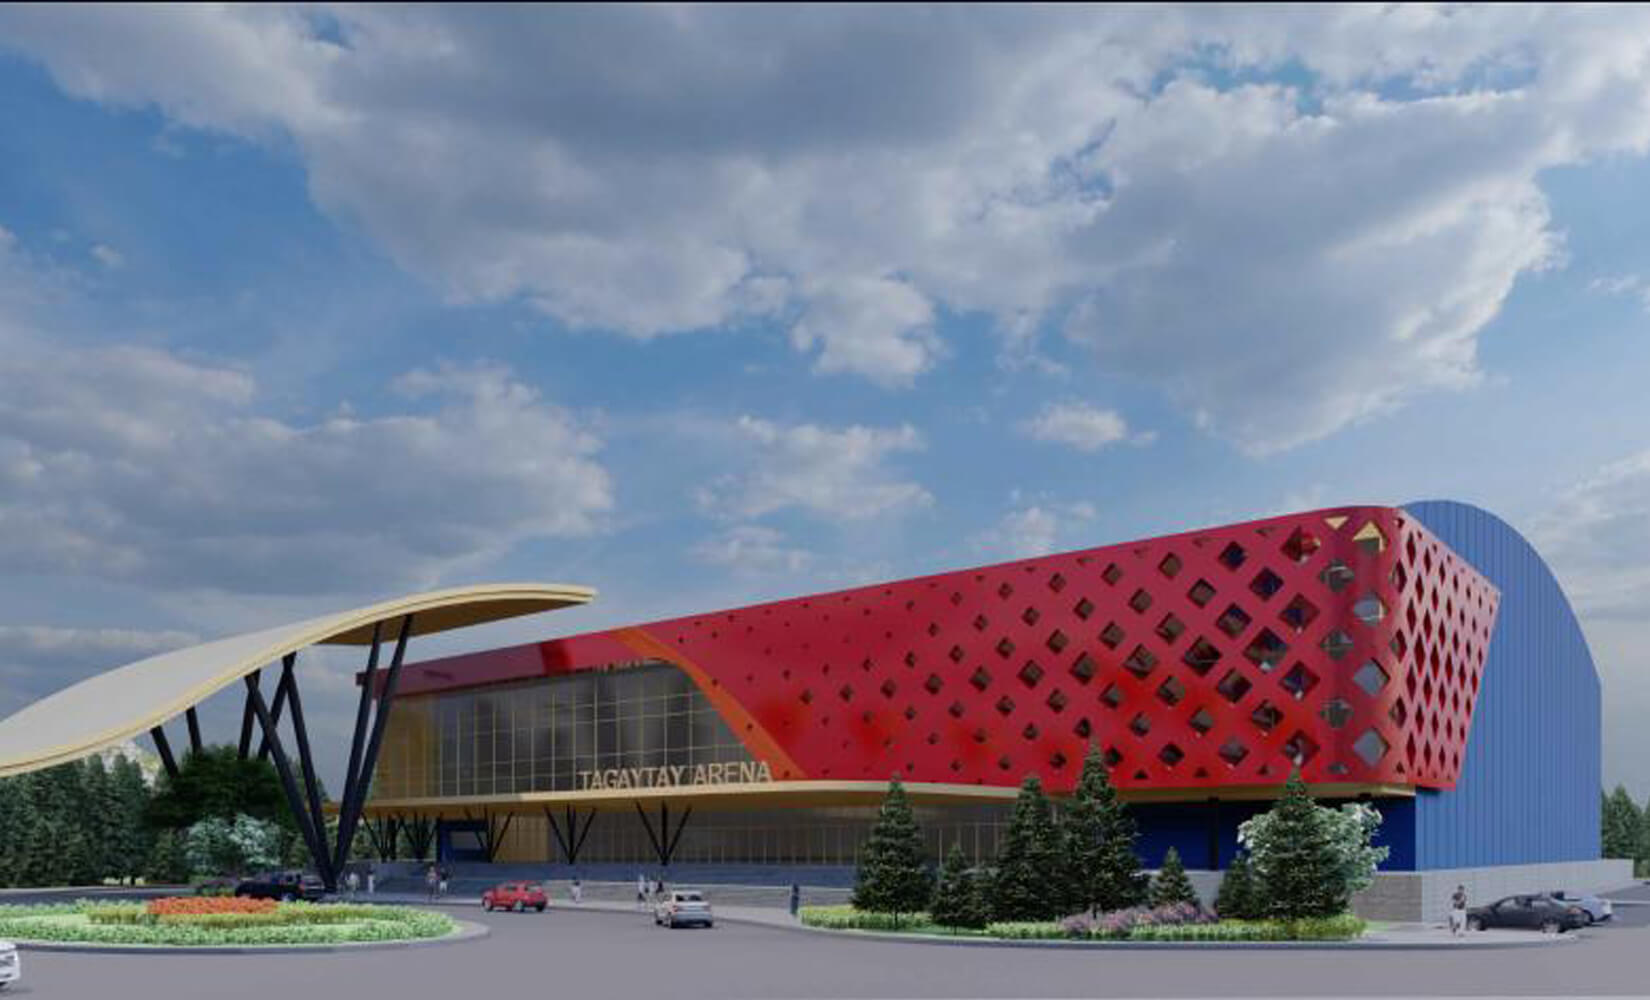 Tagaytay Sports Arena